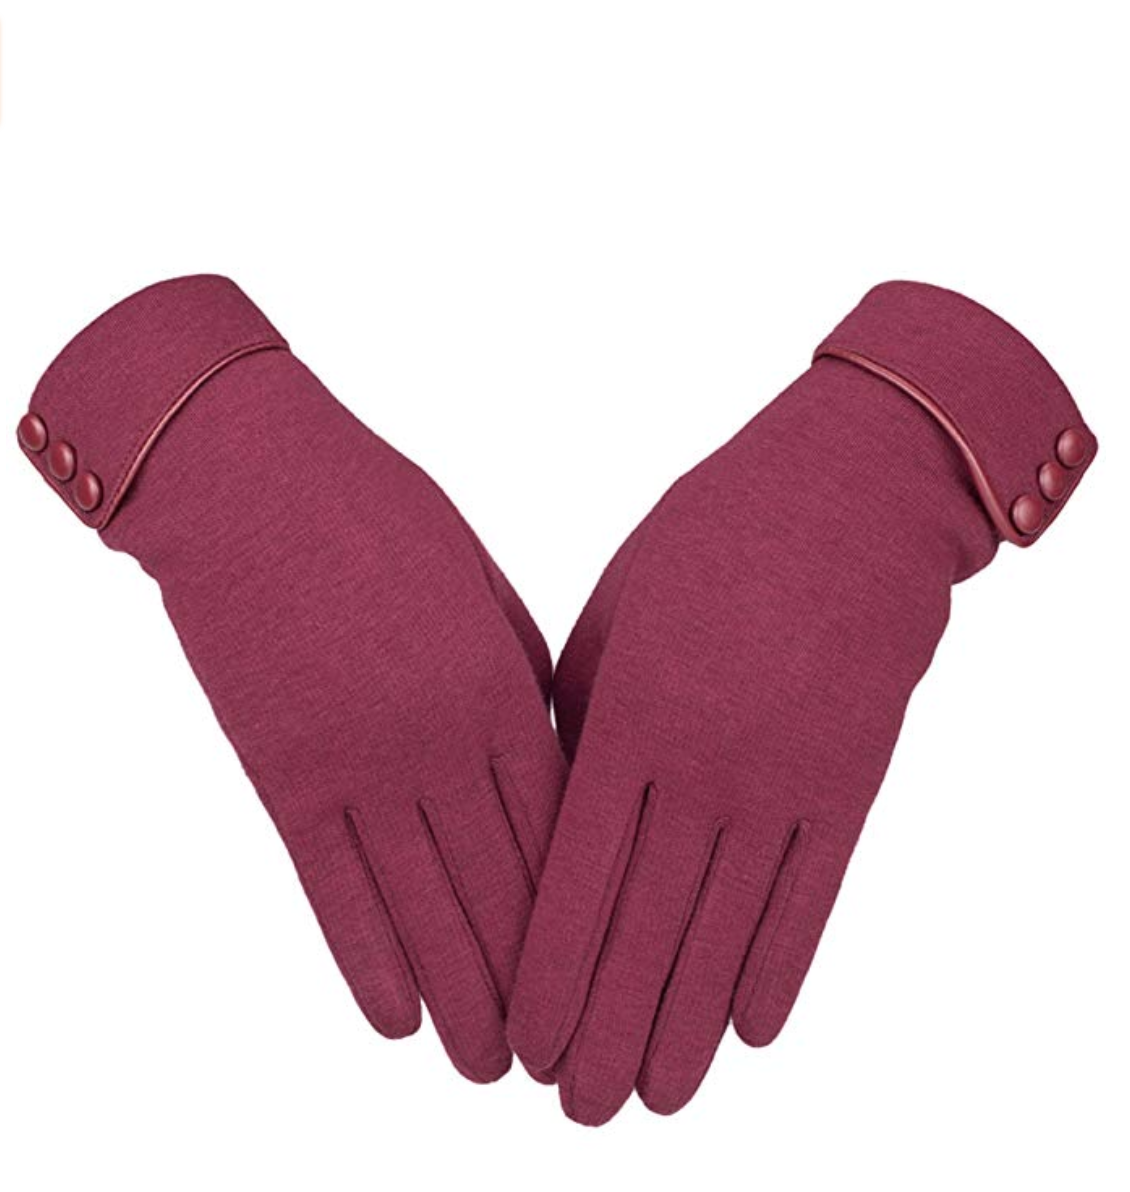 ROSYLINE Winter Gloves for Women Womens Leather Gloves Warm Winter Driving Gloves Touchscreen